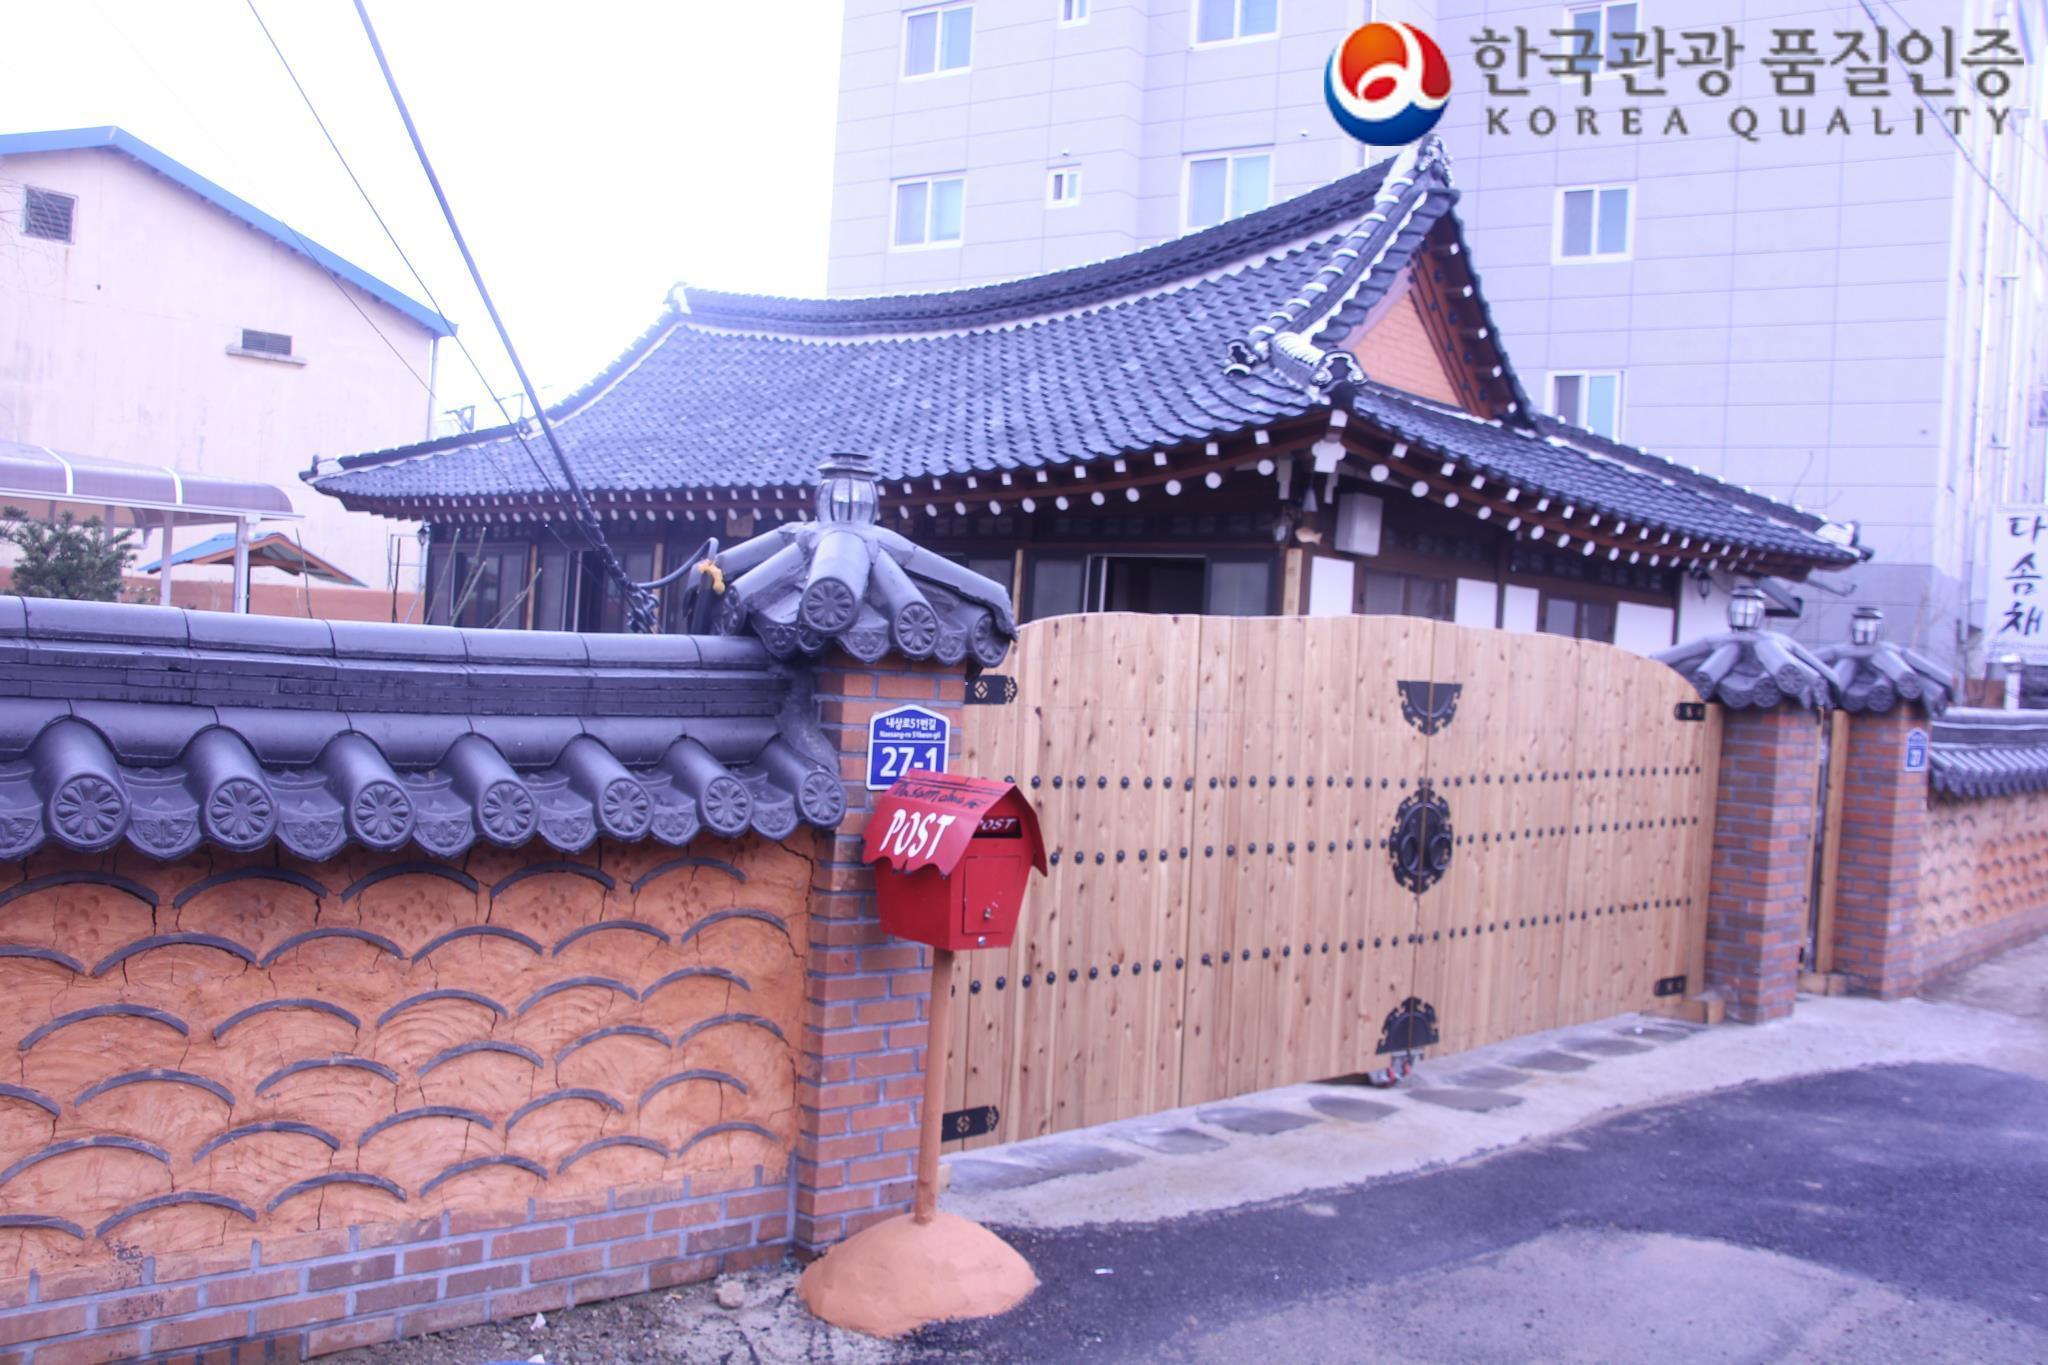 Dasomchae Hanok Stay (Korea Quality) - 광주광역시